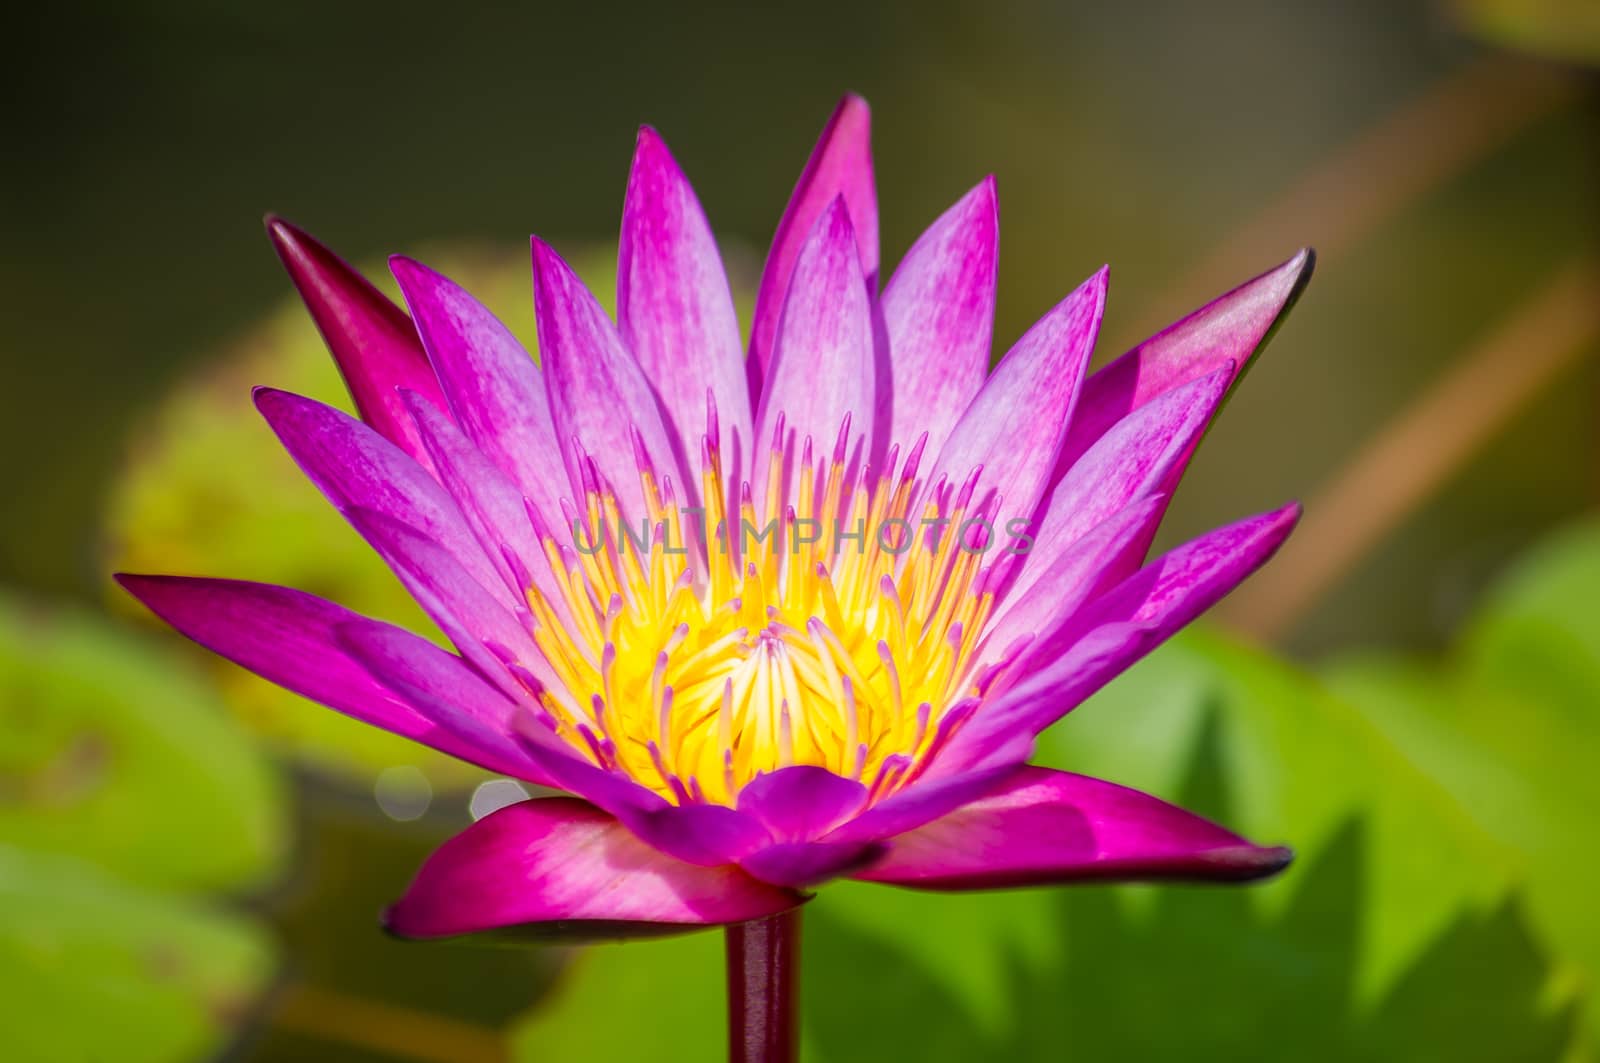 Beautiful water lily closeup, macro